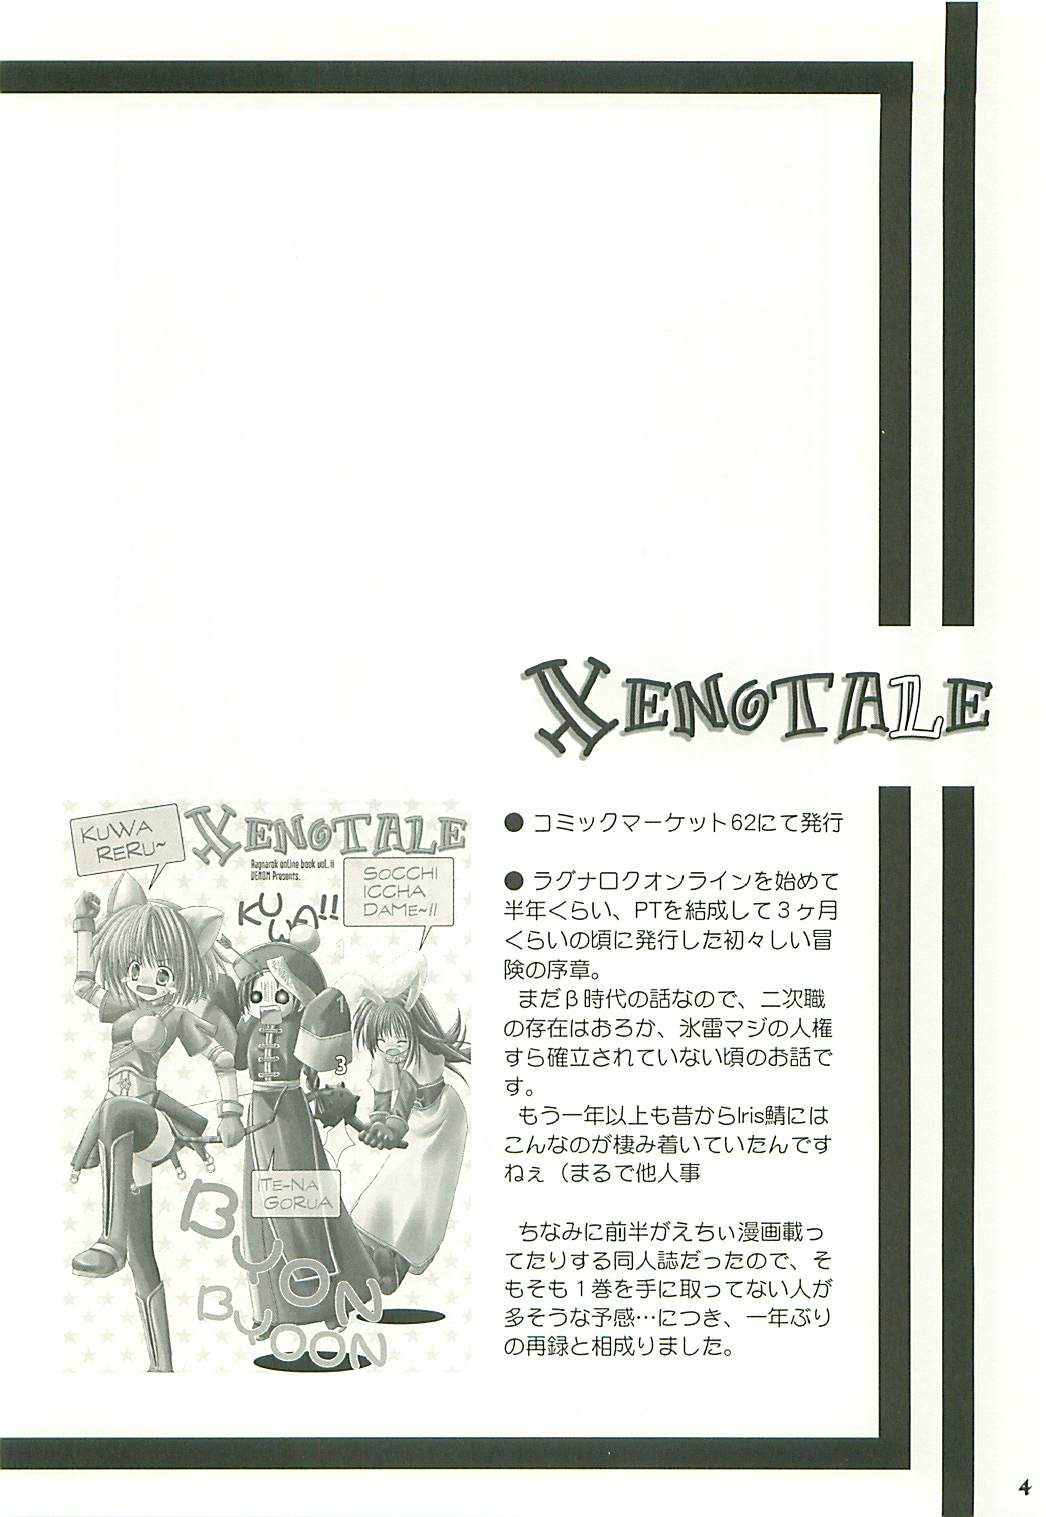 [VENOM]  XENOTALE V &amp; from I to IV [或斗せねか] XENOTALE V &amp; from I to IV